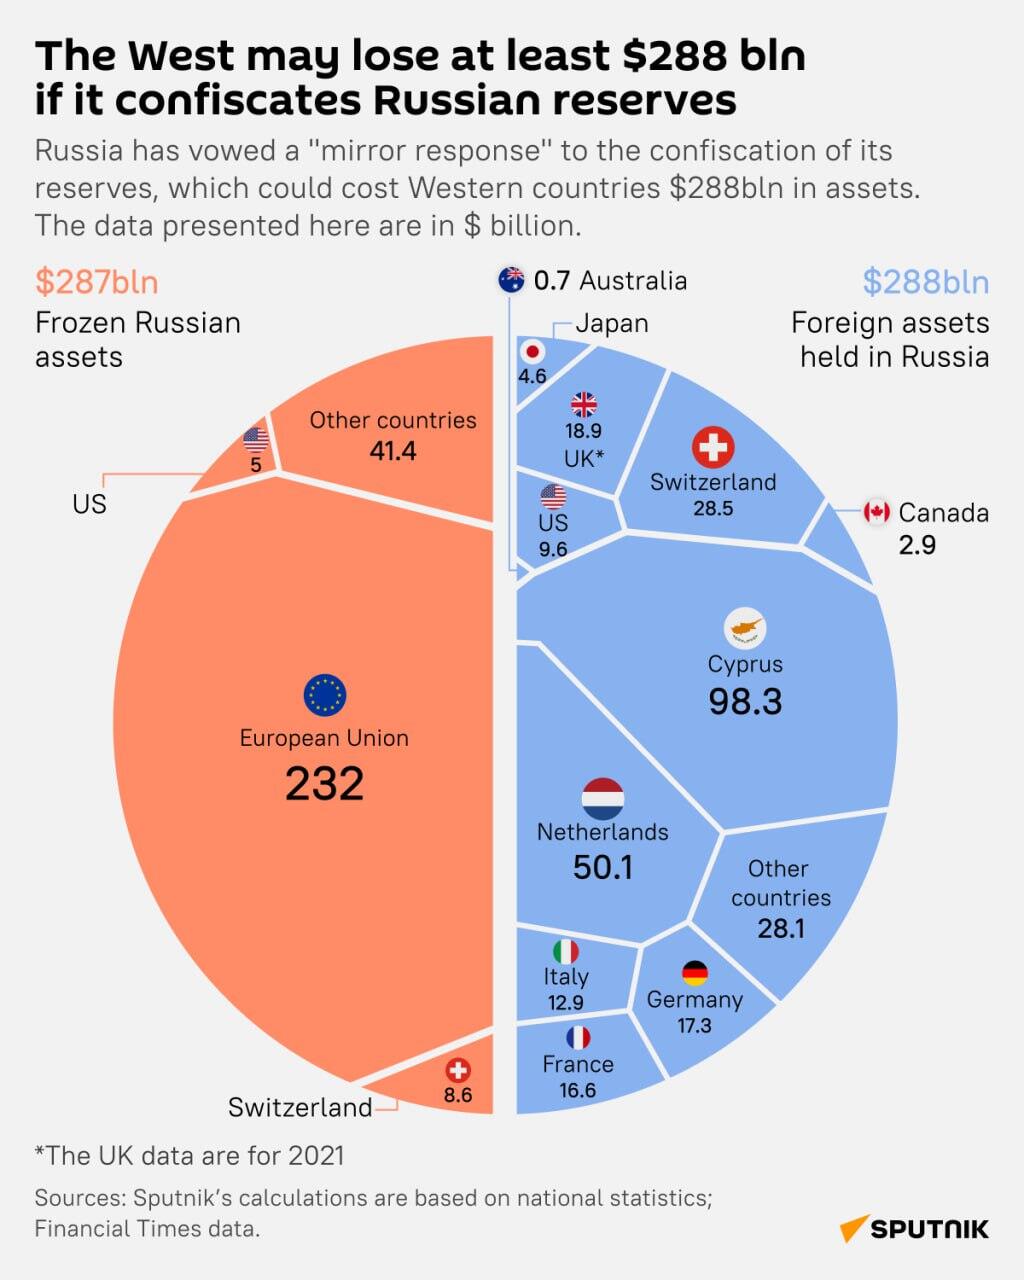 Foreign assets held in Russia - Sputnik International